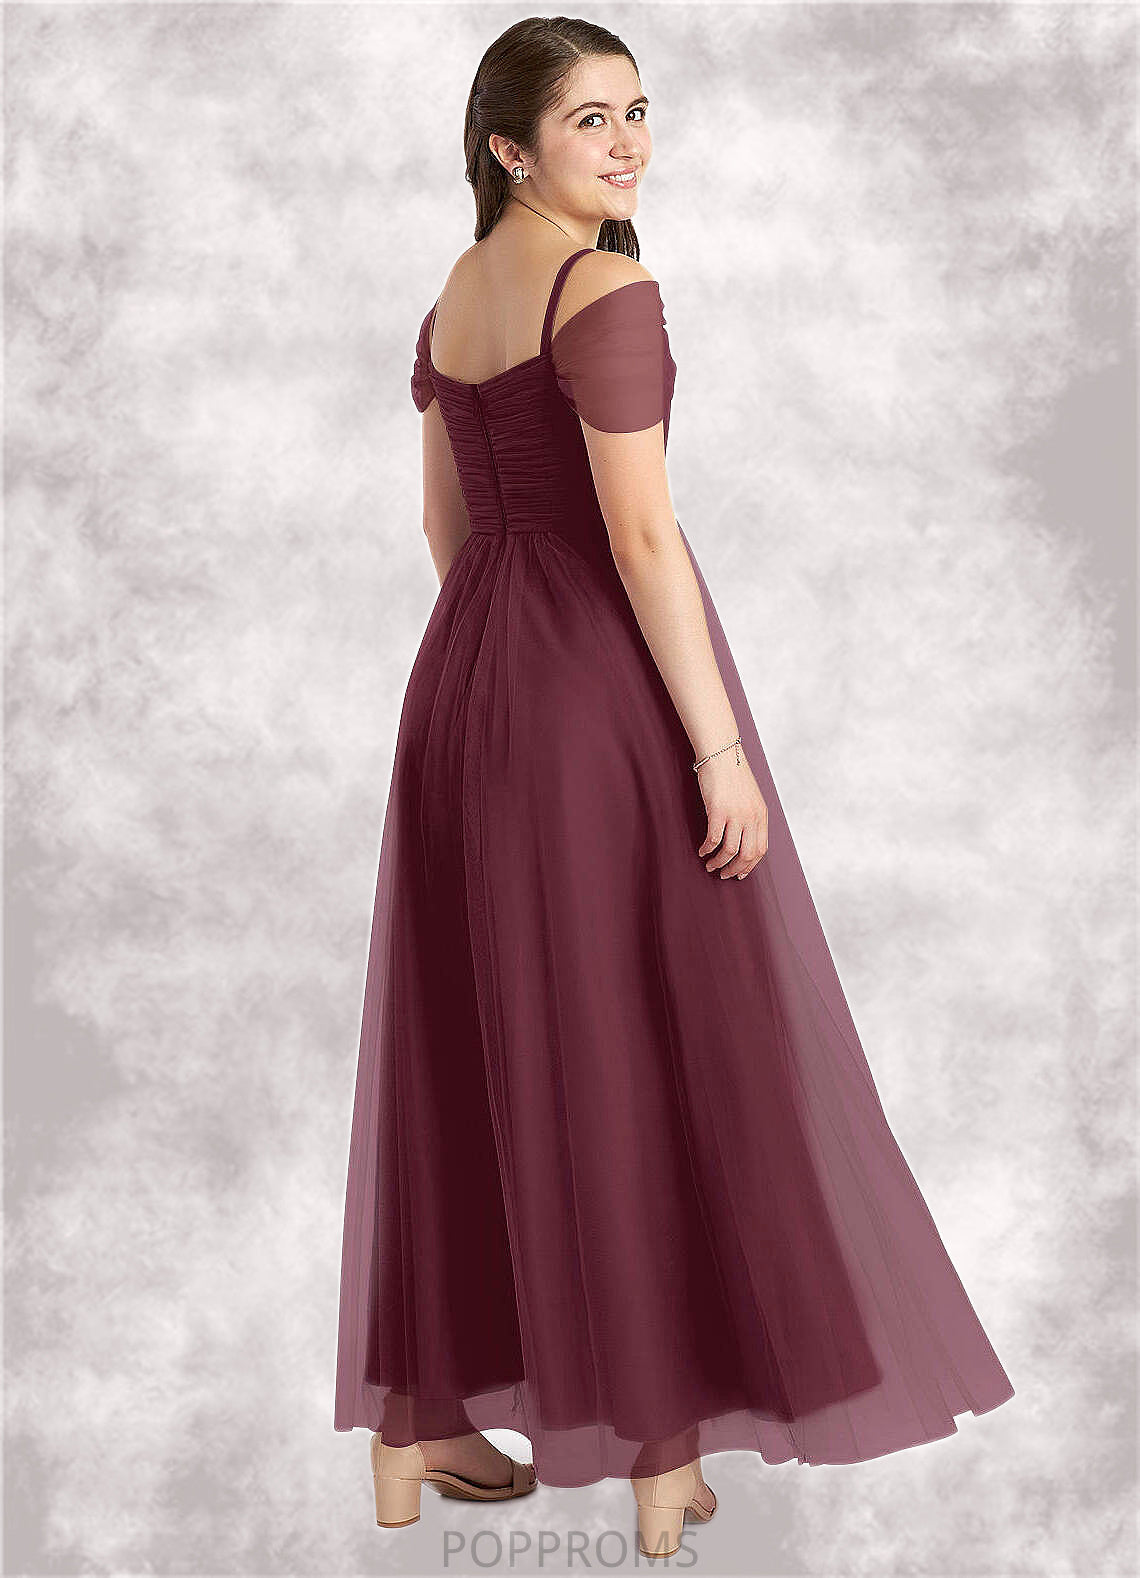 Laila A-Line Off the Shoulder Tulle Floor-Length Junior Bridesmaid Dress Cabernet PP6P0022873